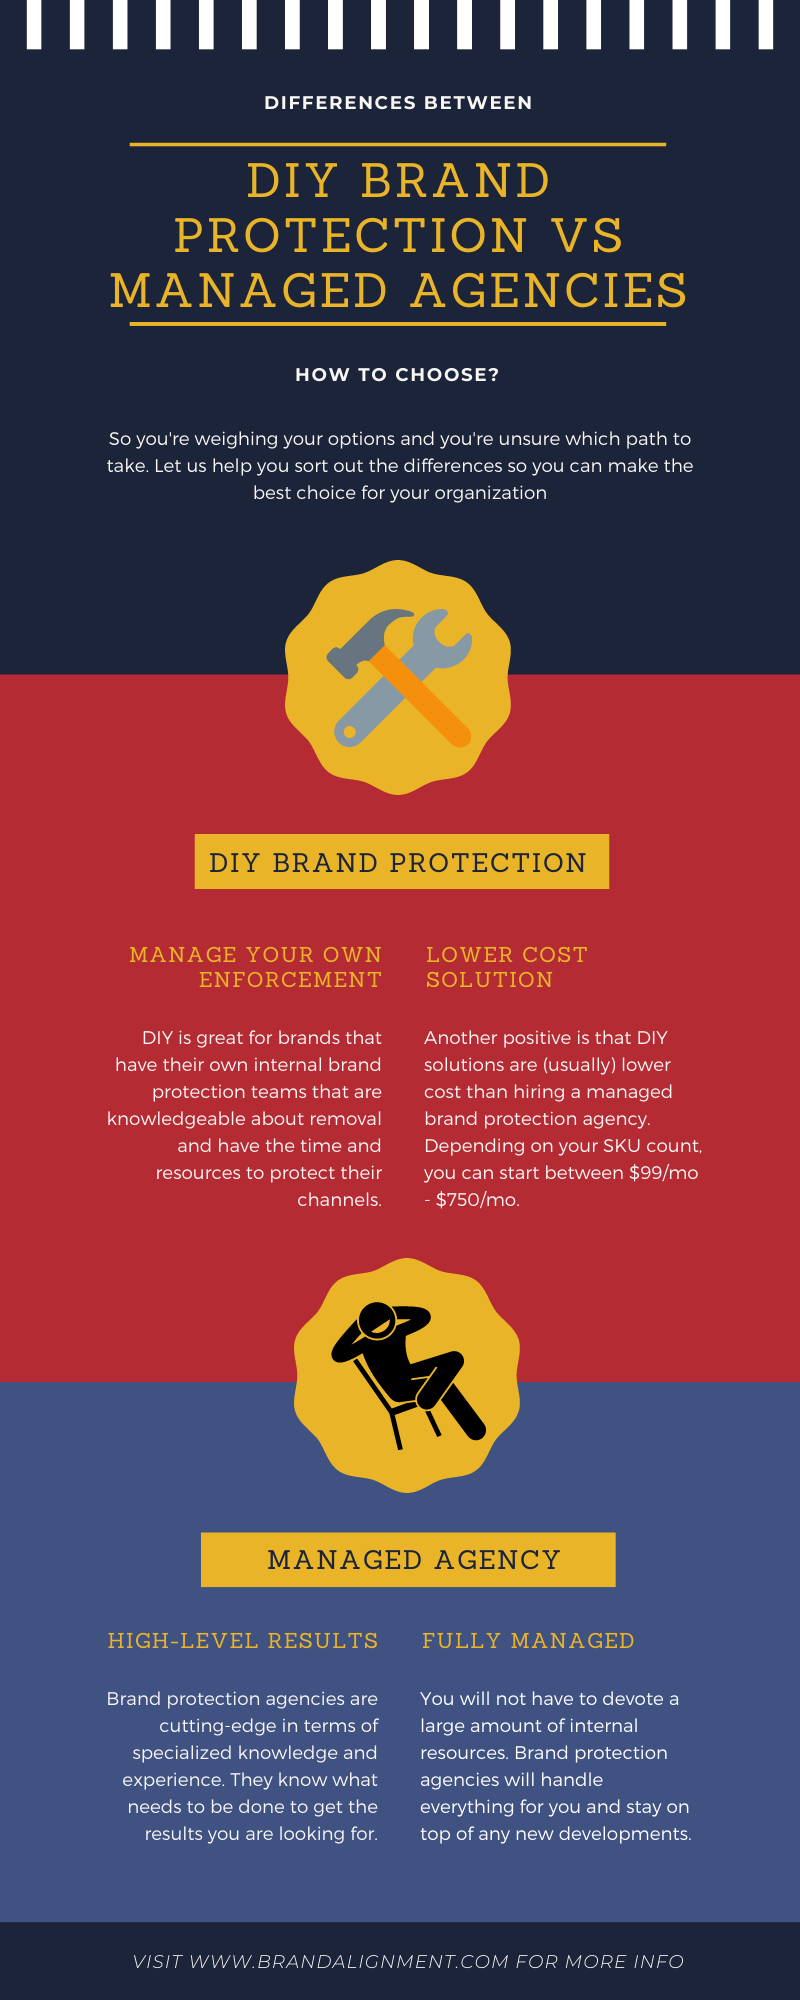 Self Service Brand Protection vs Brand Protection Agency